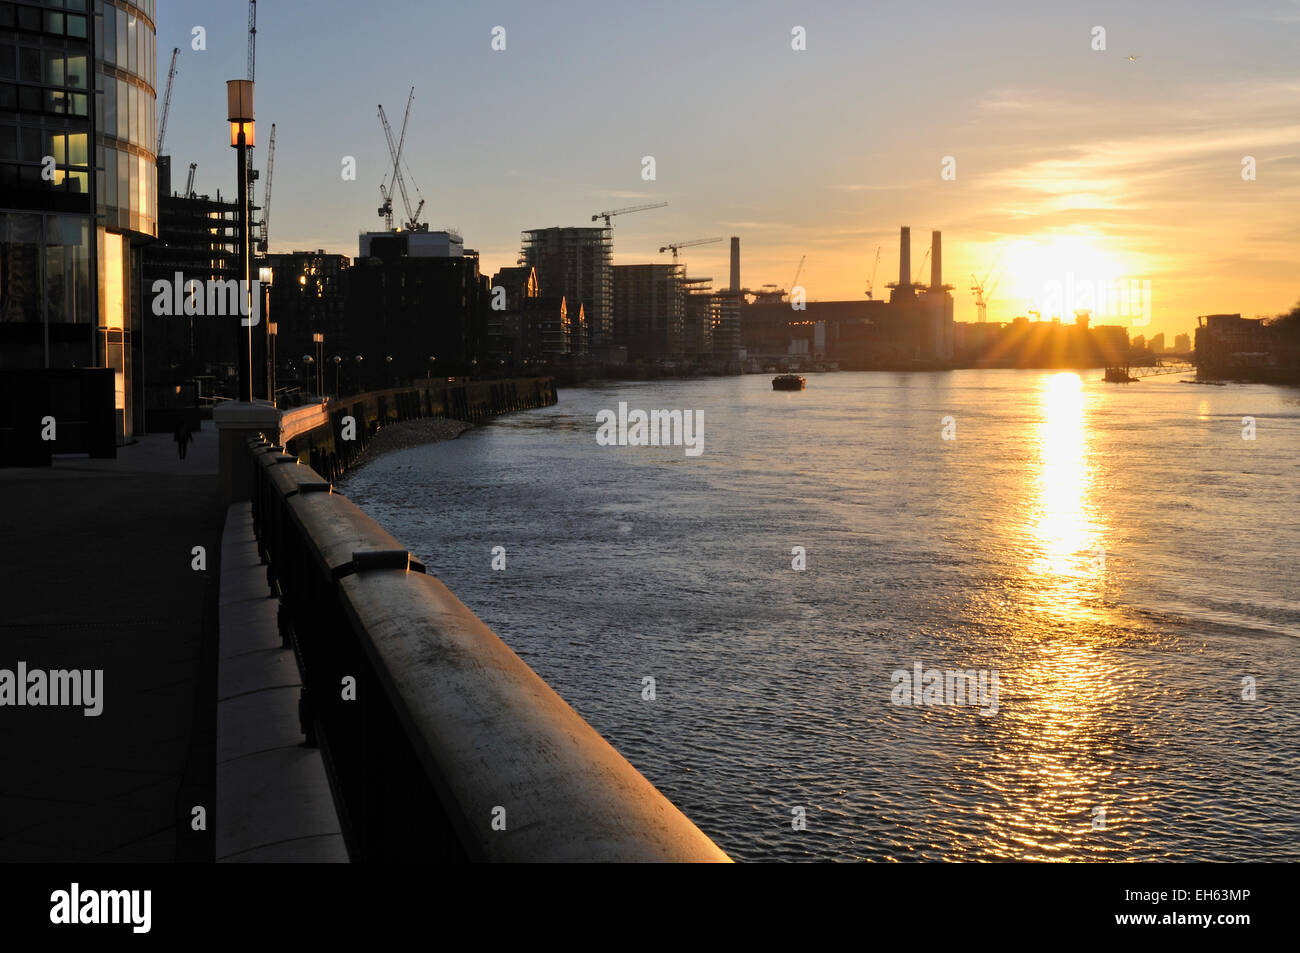 South Bank of the Thames at Vauxhall, London UK at dusk, looking towards Battersea. Stock Photo